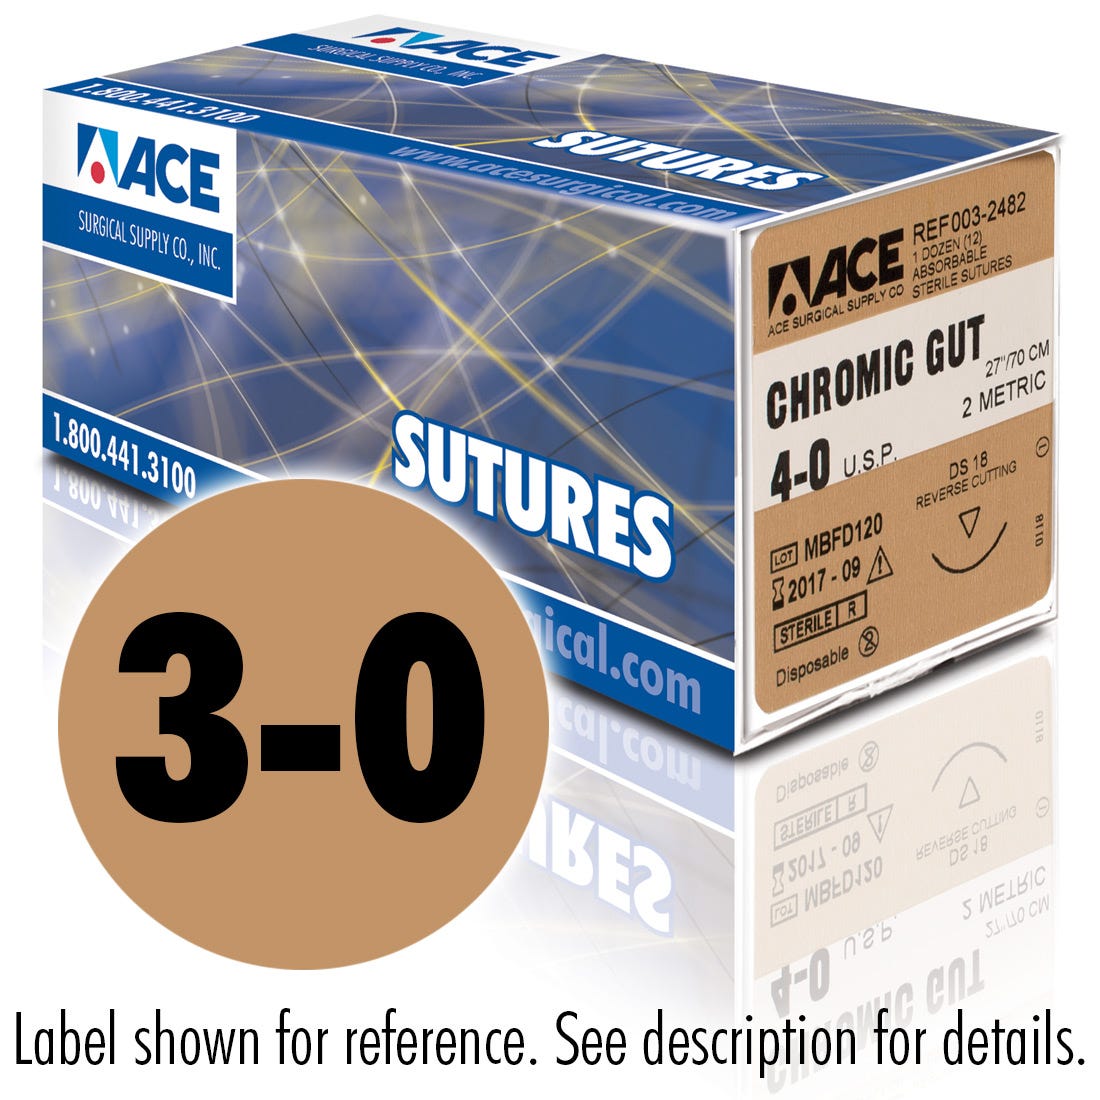 ACE 3-0 Chromic Gut Sutures, DS18, 18", 12/Box